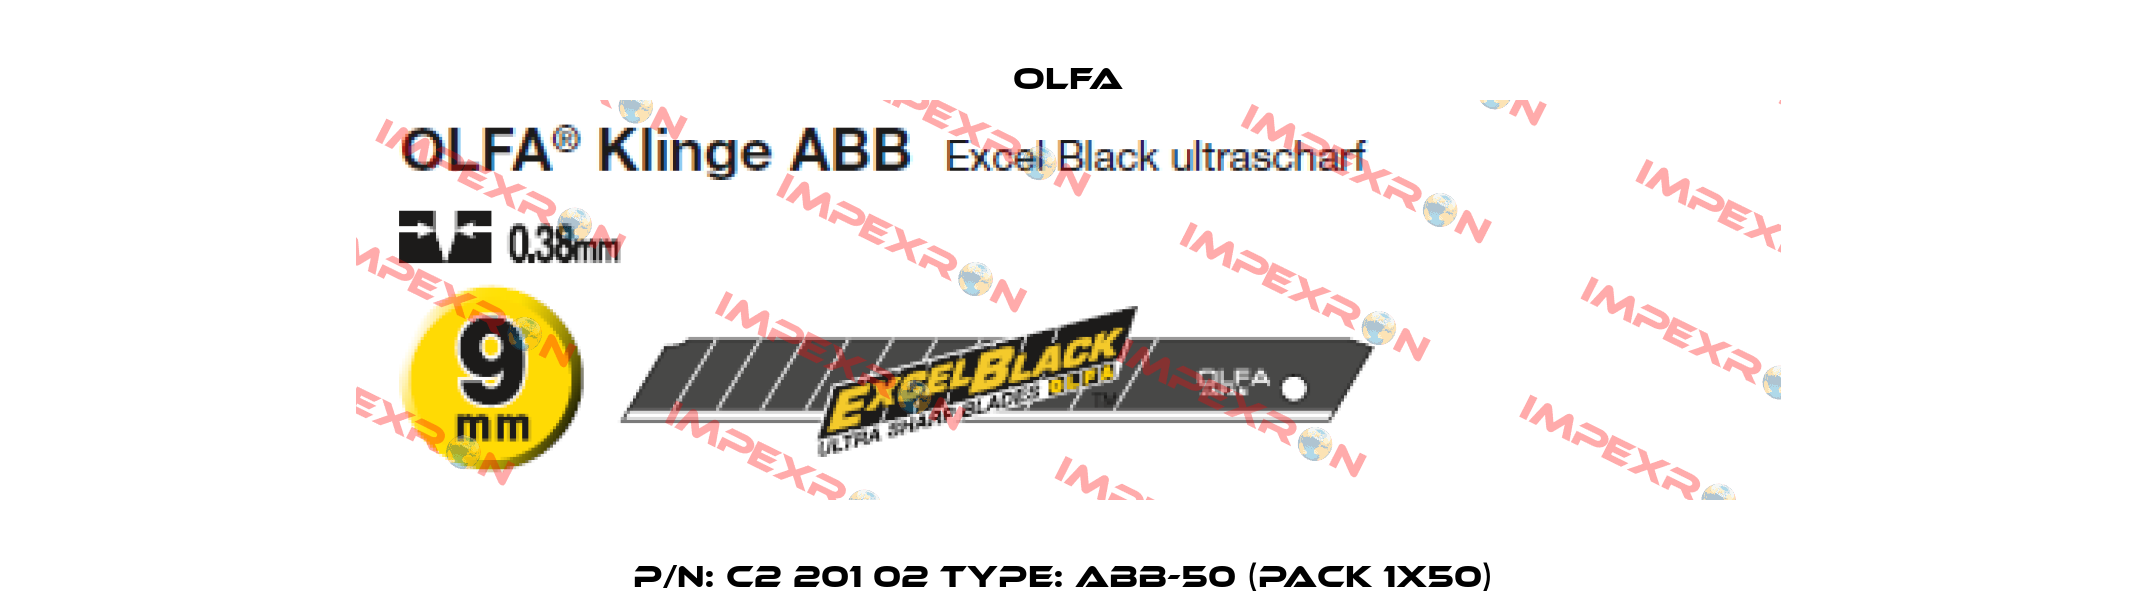 P/N: C2 201 02 Type: ABB-50 (pack 1x50)  Olfa